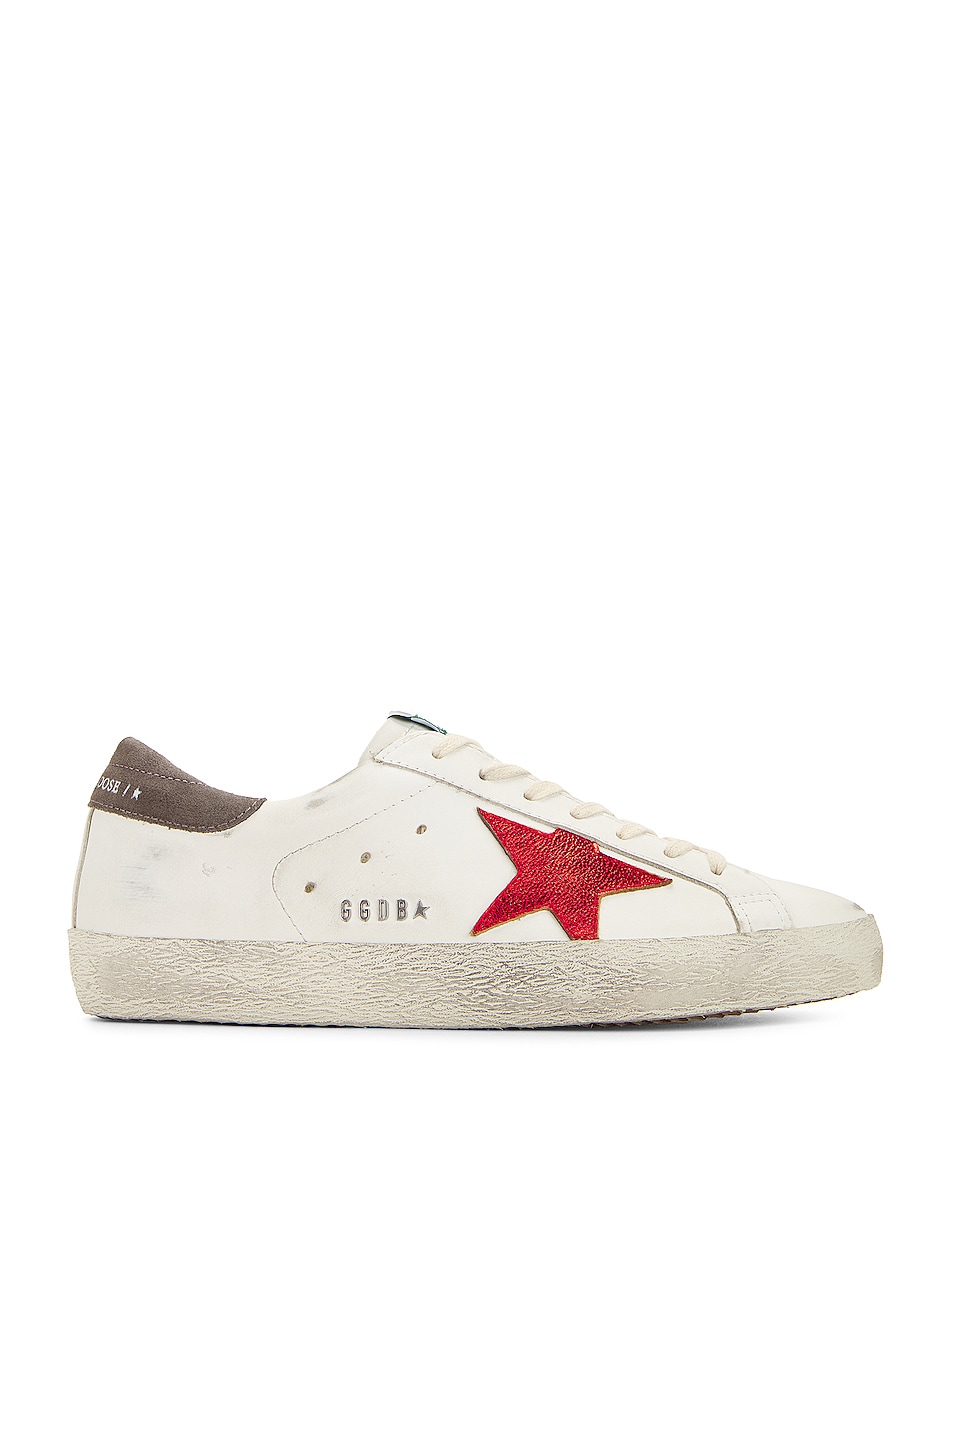 Image 1 of Golden Goose Super Star Shoe in White, Red, & Dark Grey